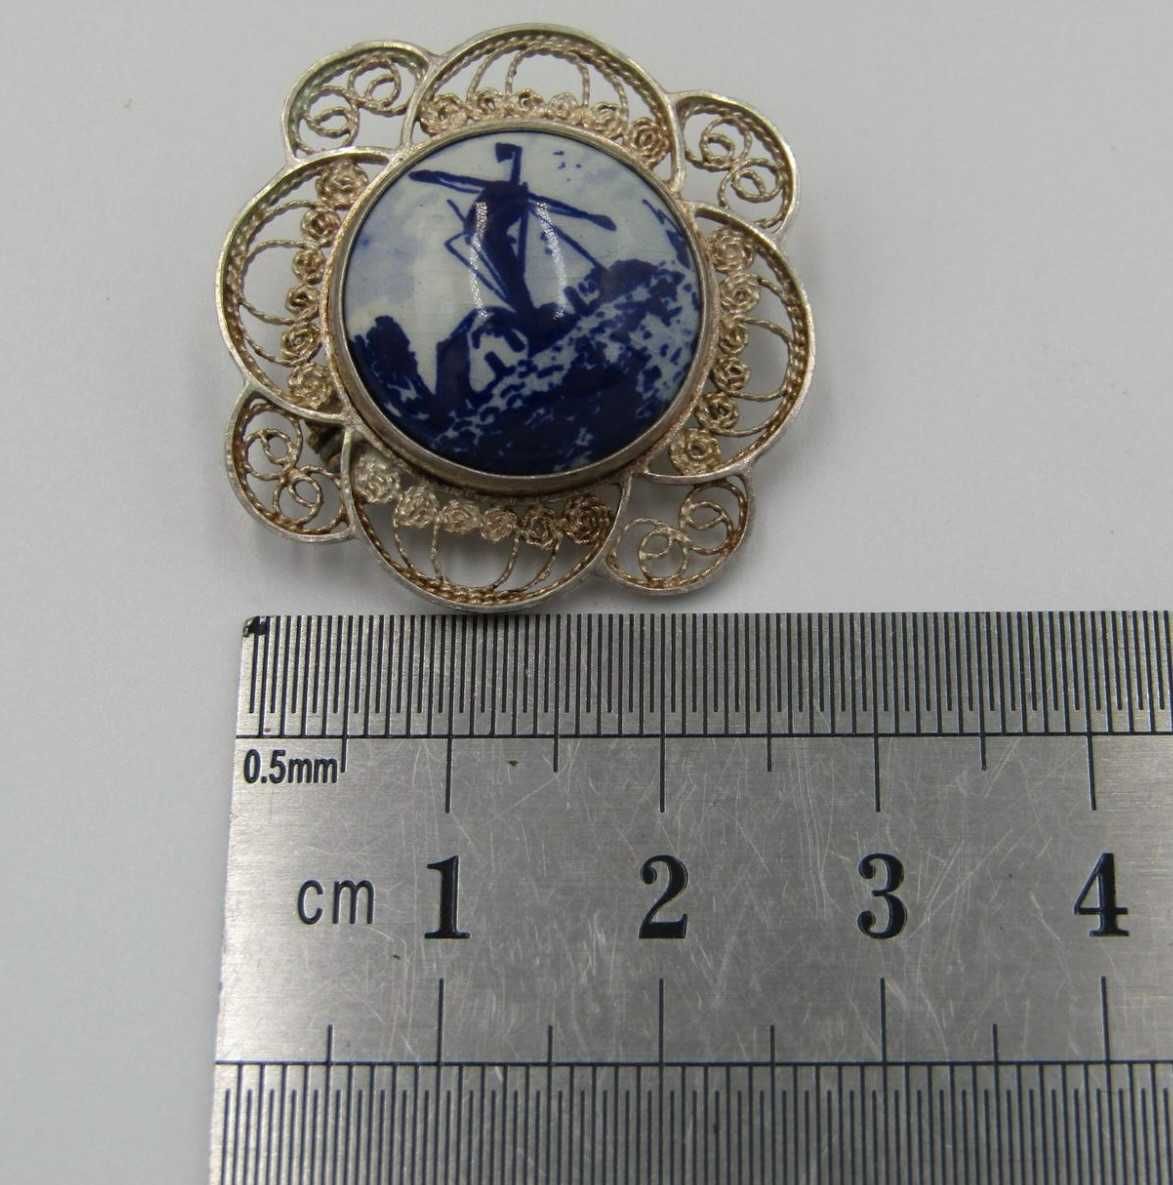 Vintage Silver Delft porcelain brooch with earrings set